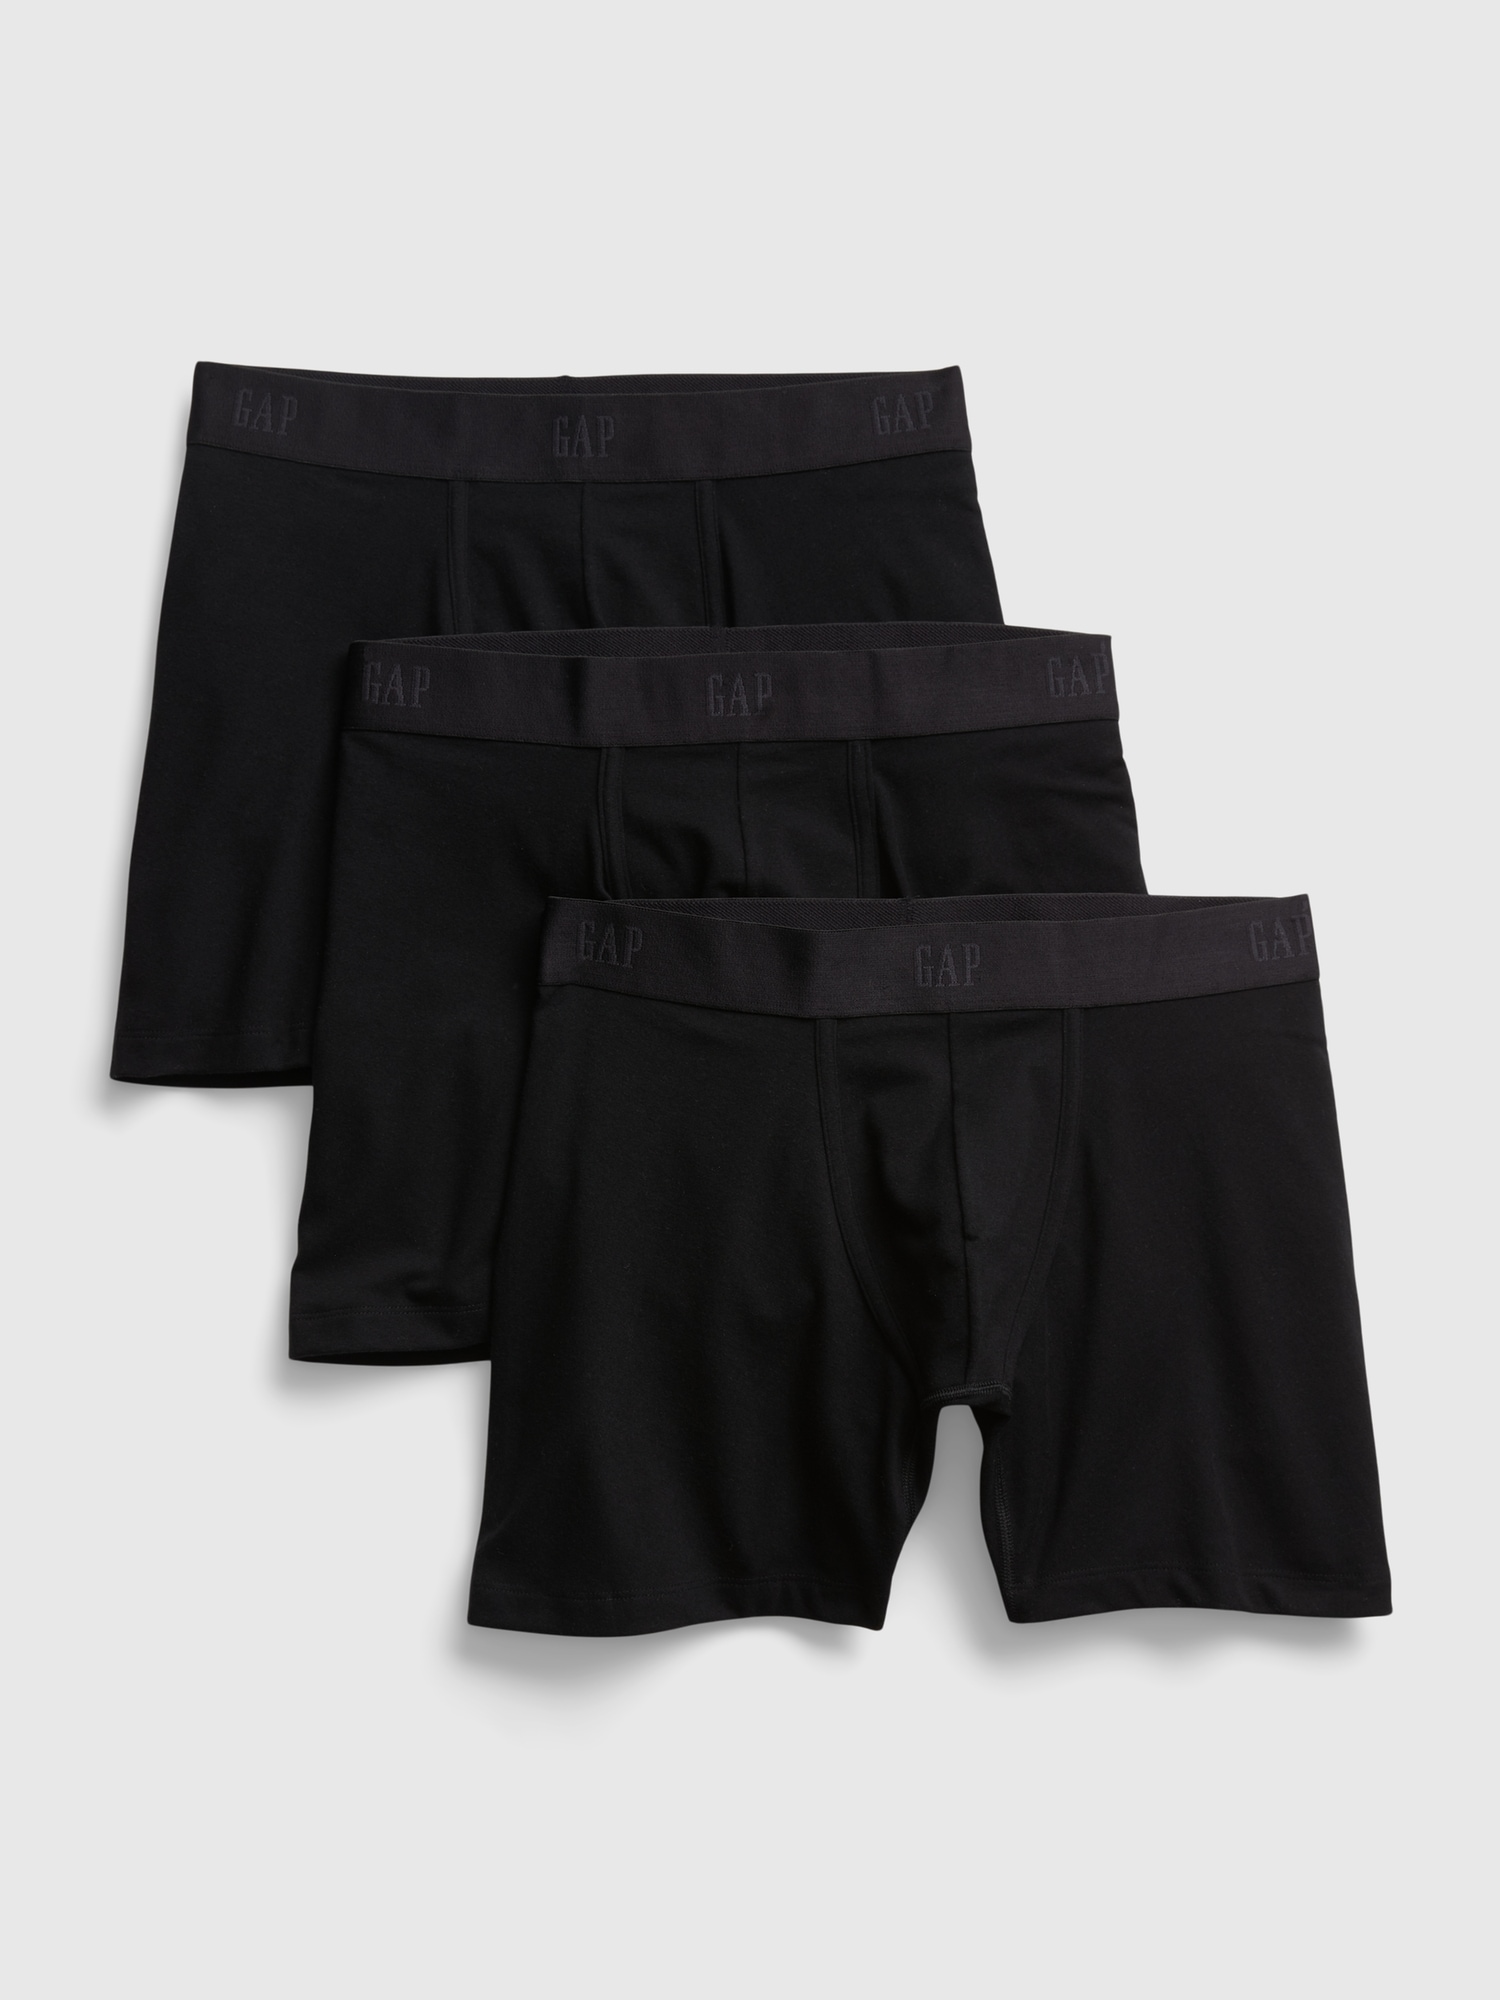 Gap Men's Cotton Boxers Size XXL (42-44) Gray White Stripe Boxer Shorts 